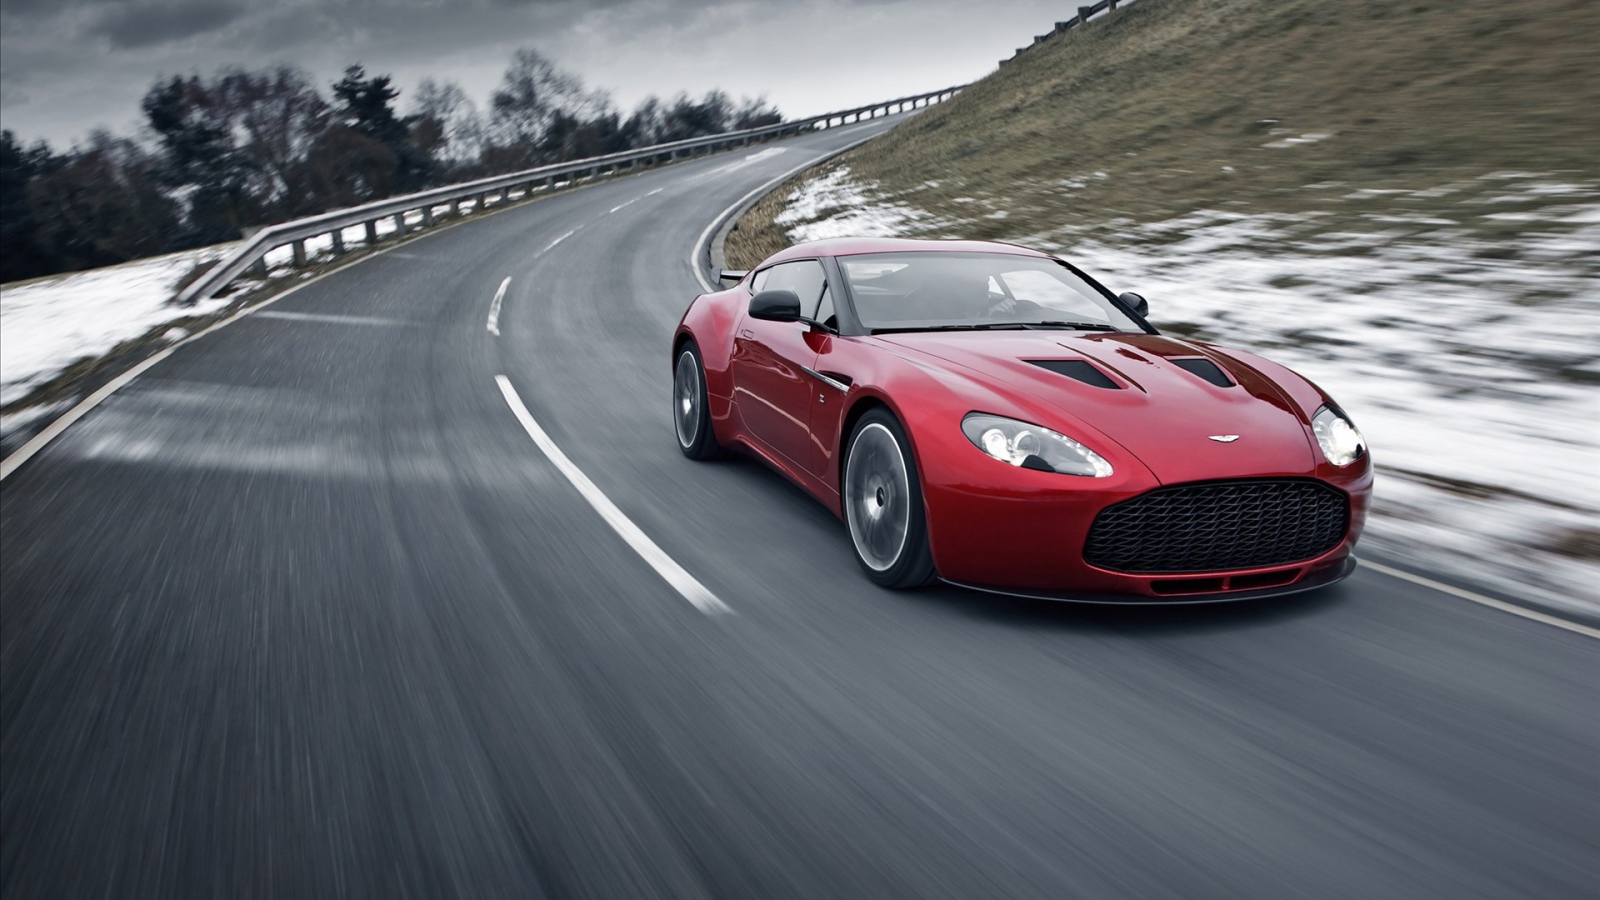 Надежный автомобиль Aston Martin zagato